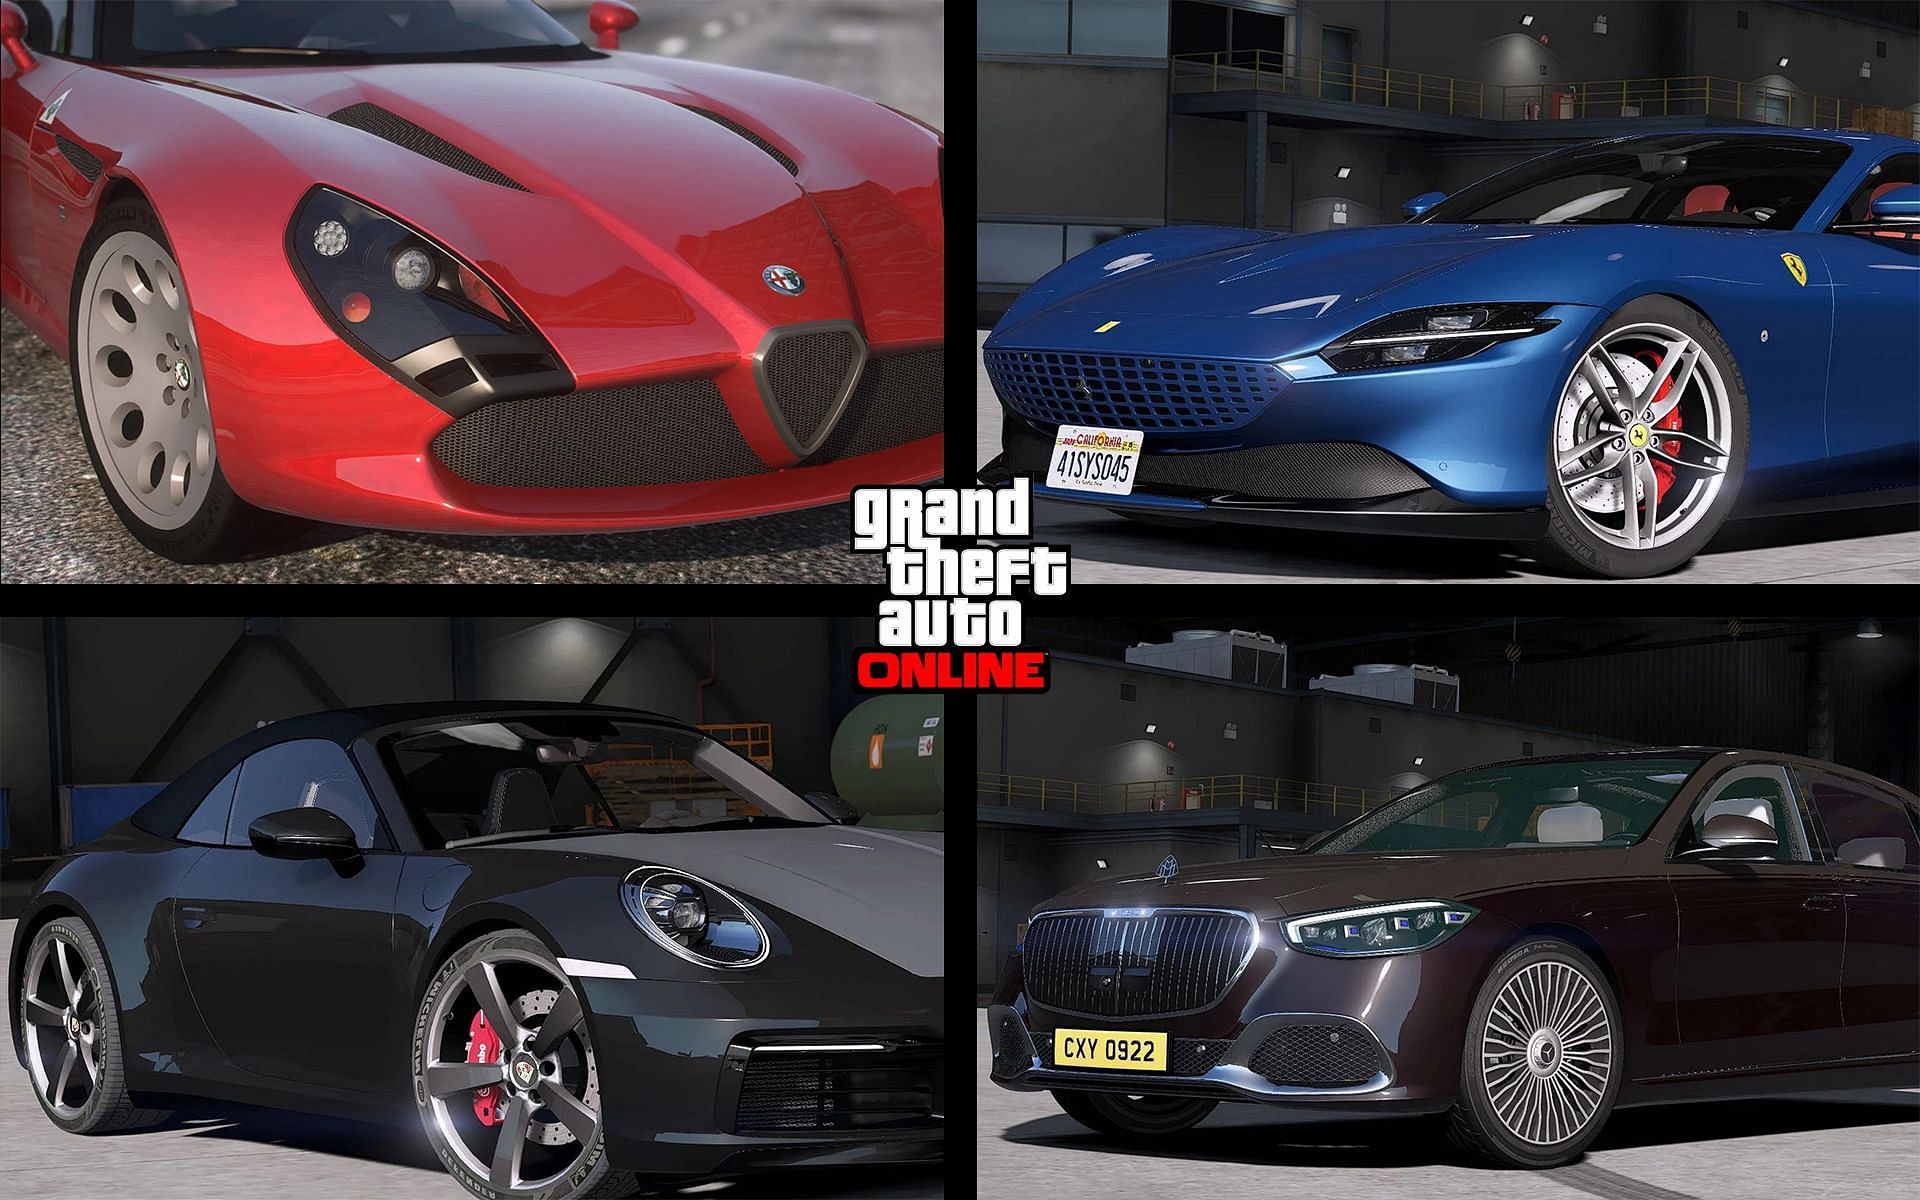 Ranking The 15 Best GTA 5 Vehicle Mods